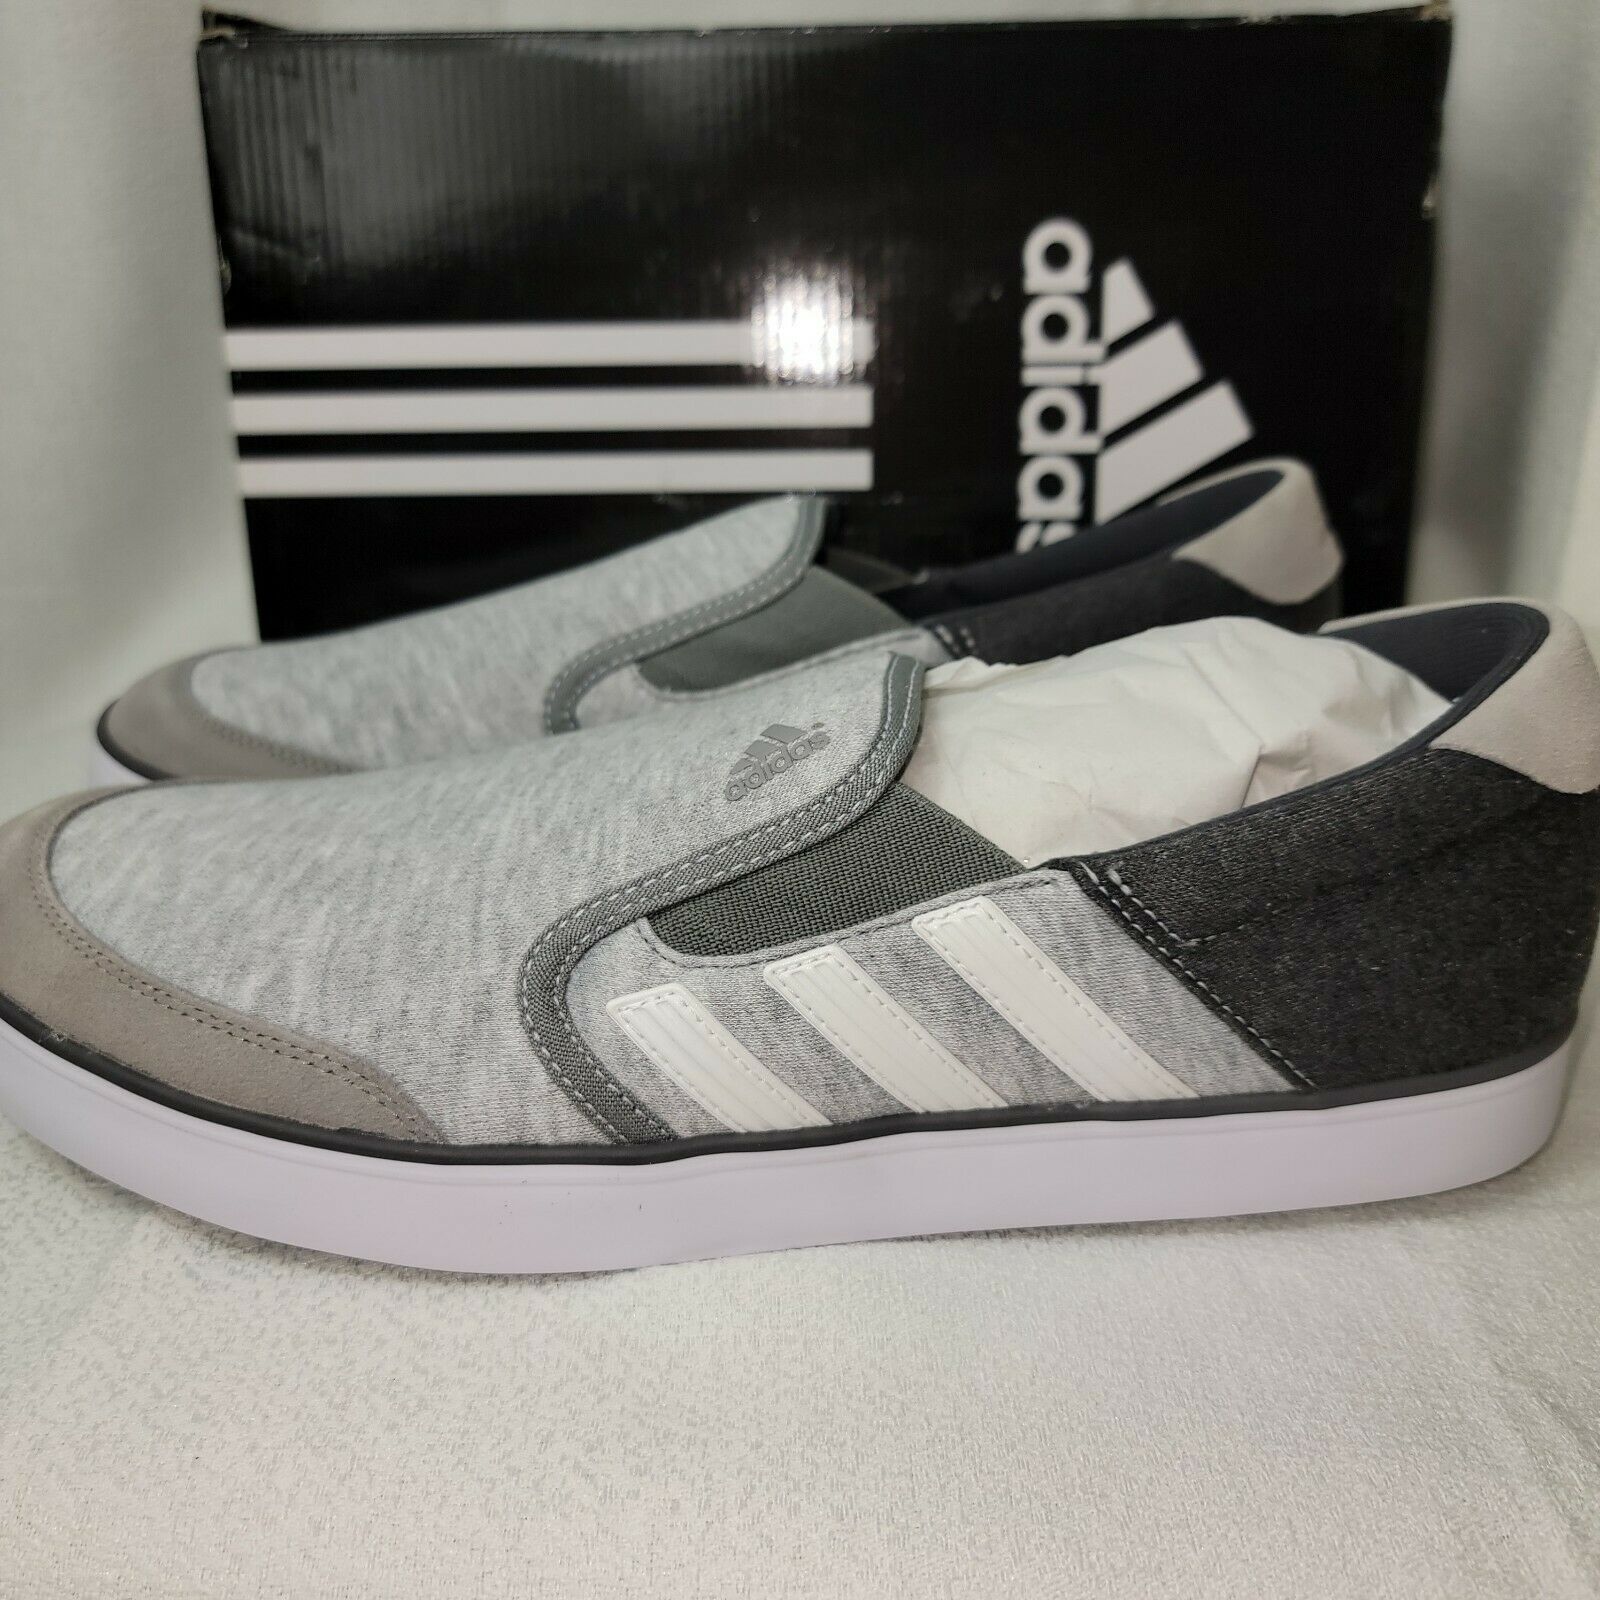 Adidas Adicross SL Men's Golf Shoes Walking Spikeless Gray Size 12 Med Q44565